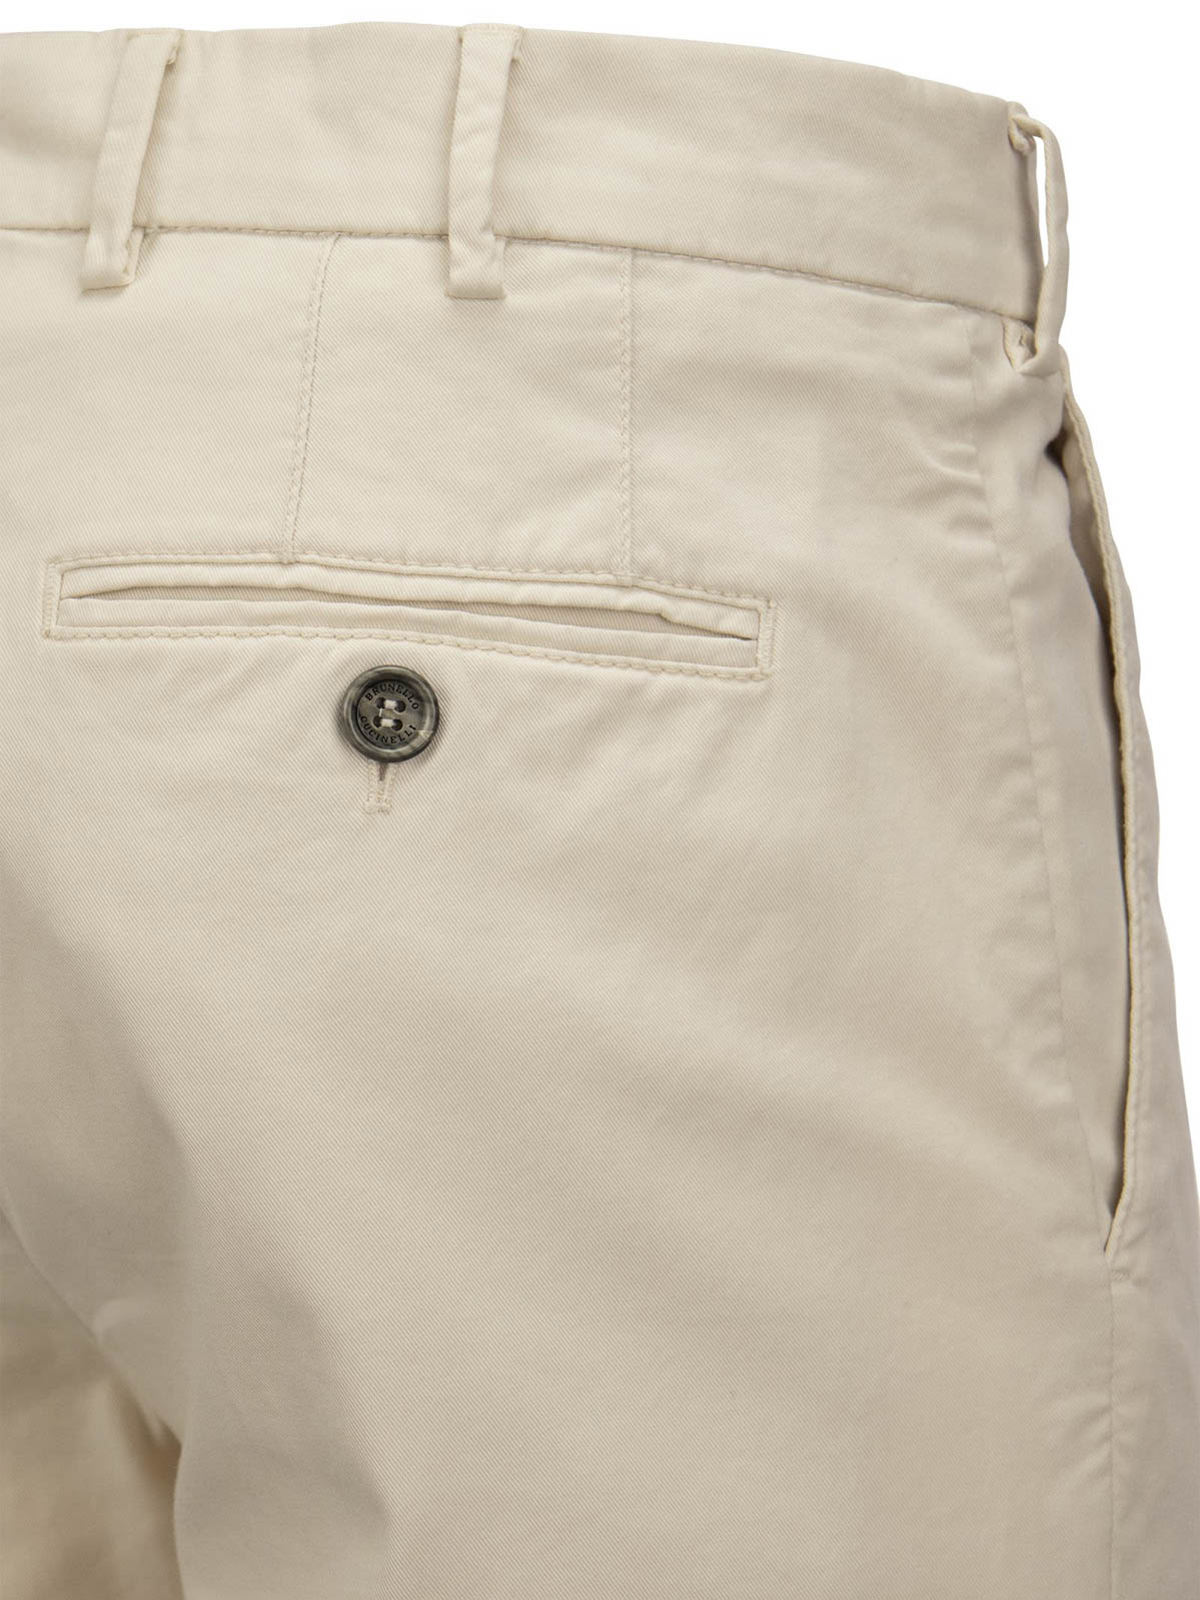 Mens Fat Loose Cotton Pants Leisure trousers Elastic waist Pockets Casual  Summer | eBay